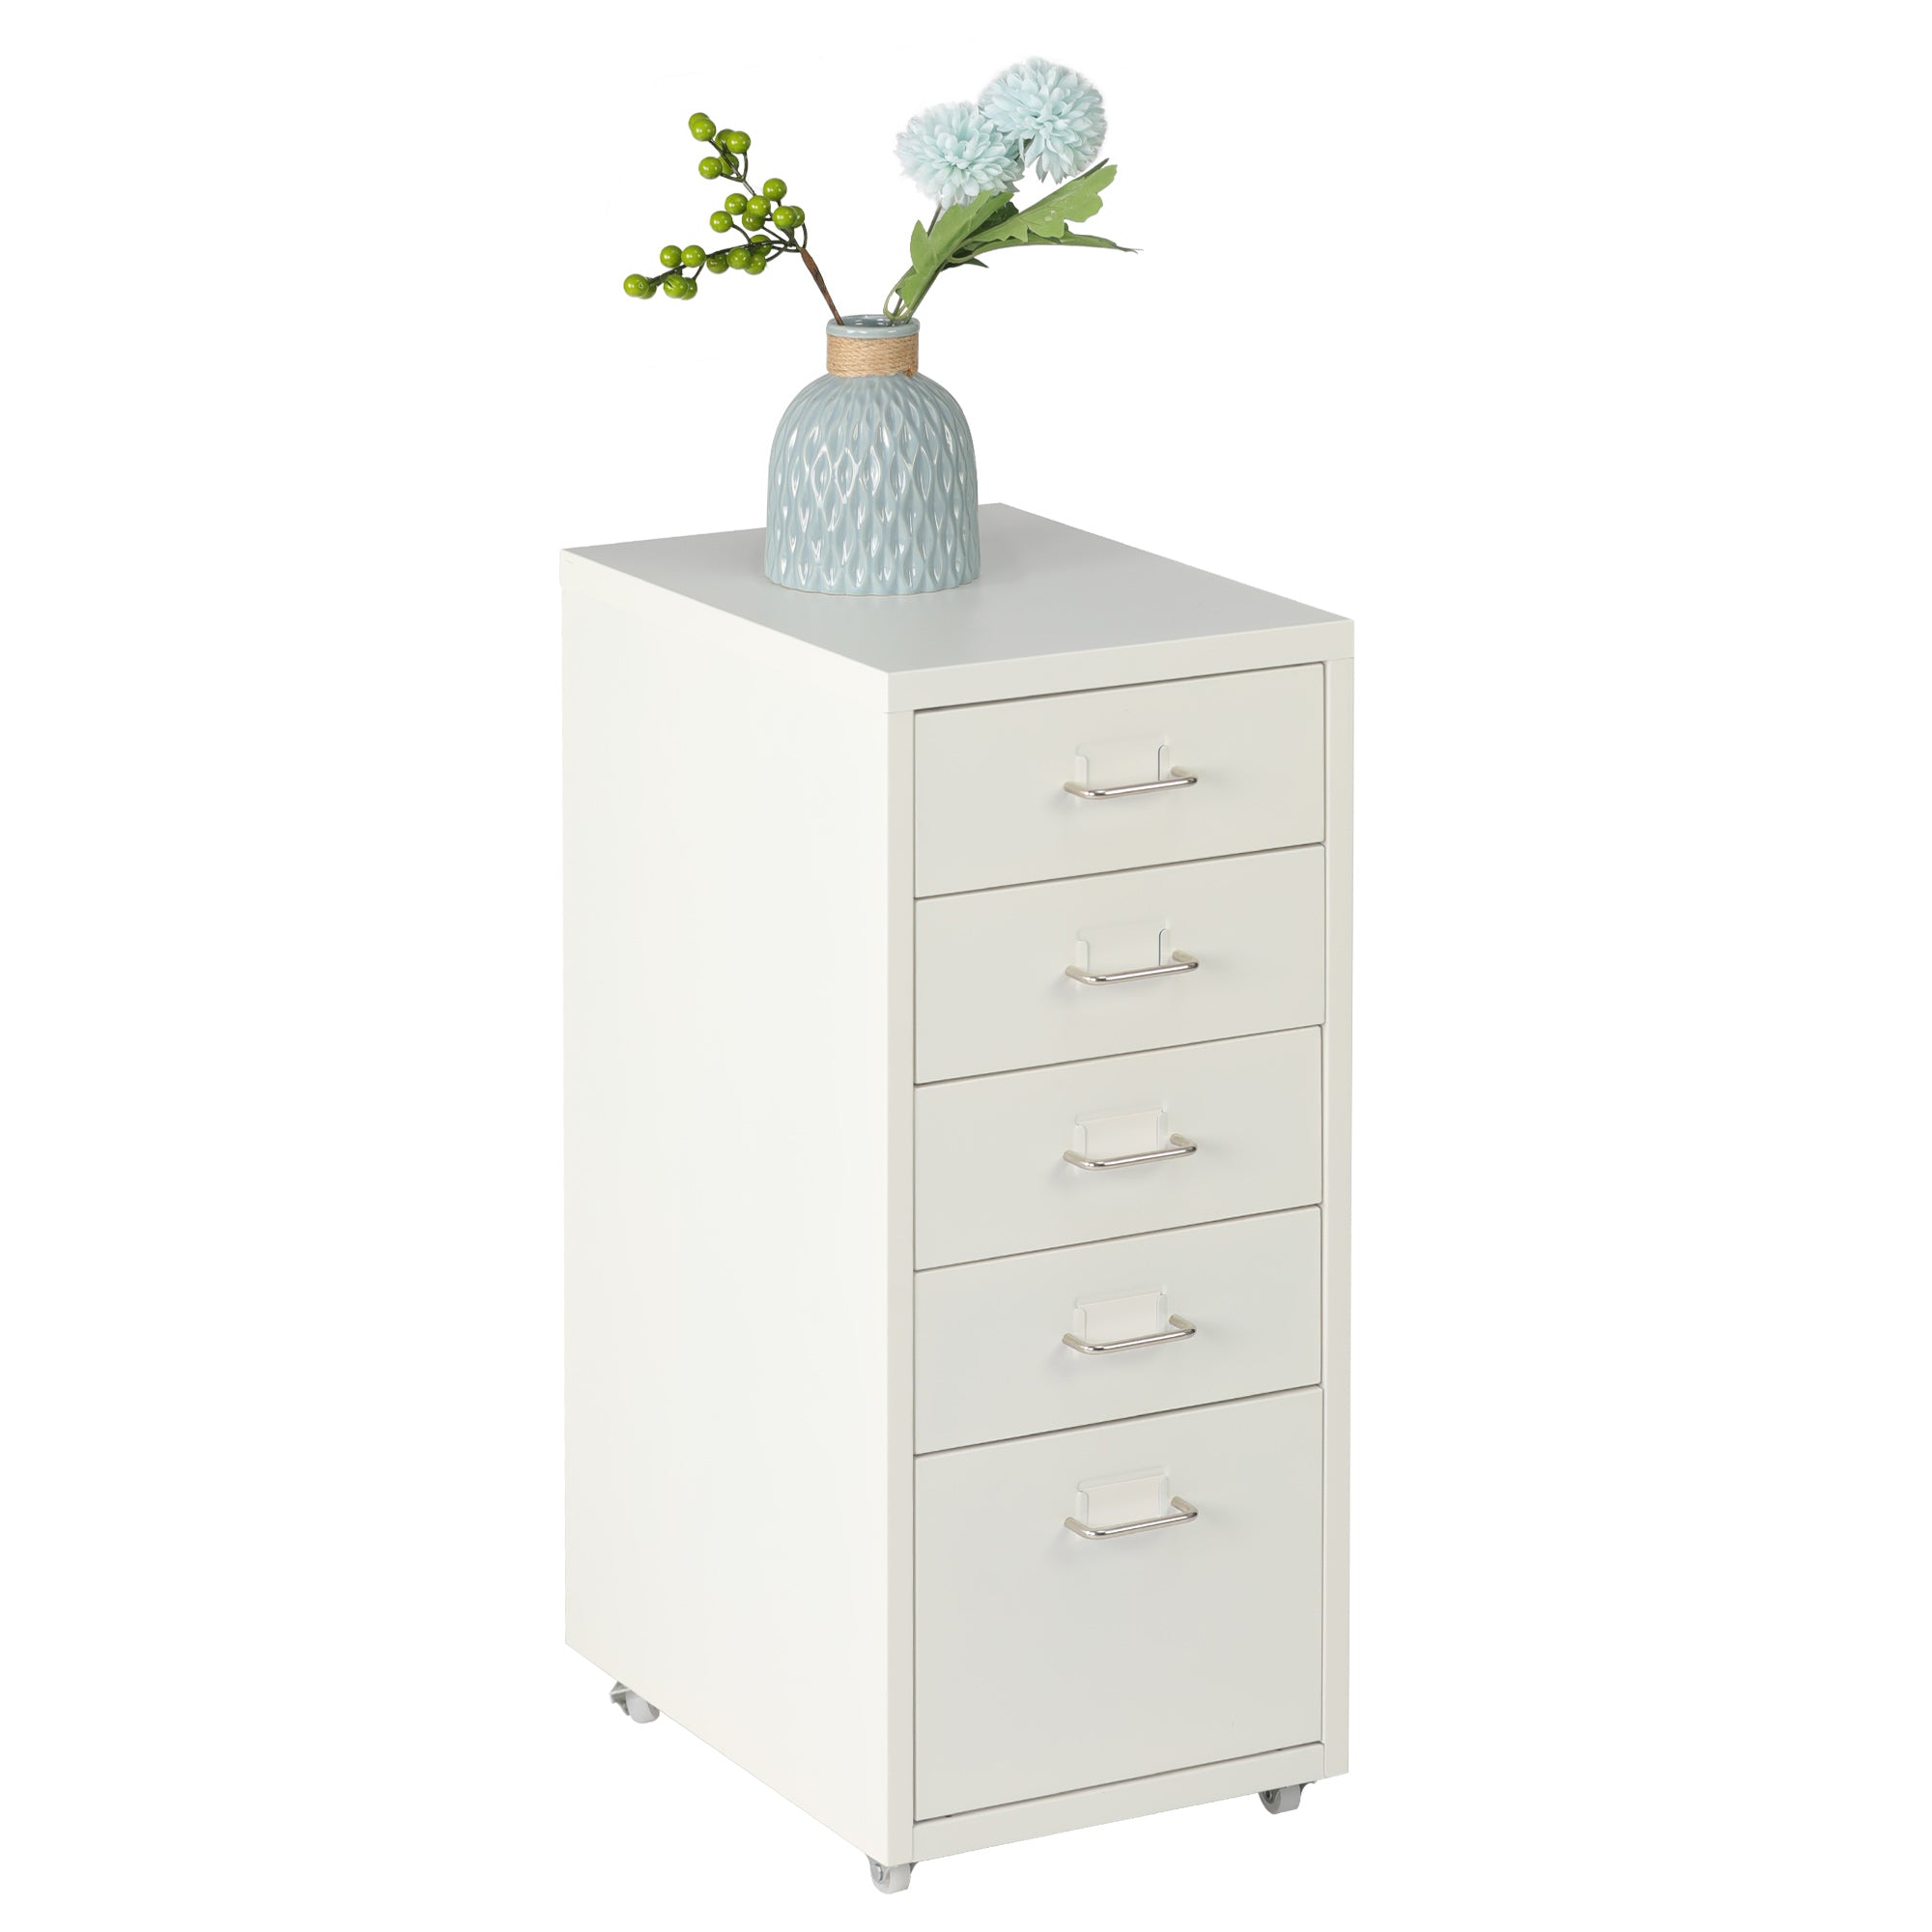 5 Drawer Storage Dresser Cabinet with Wheels Handle Slim Night Table, White